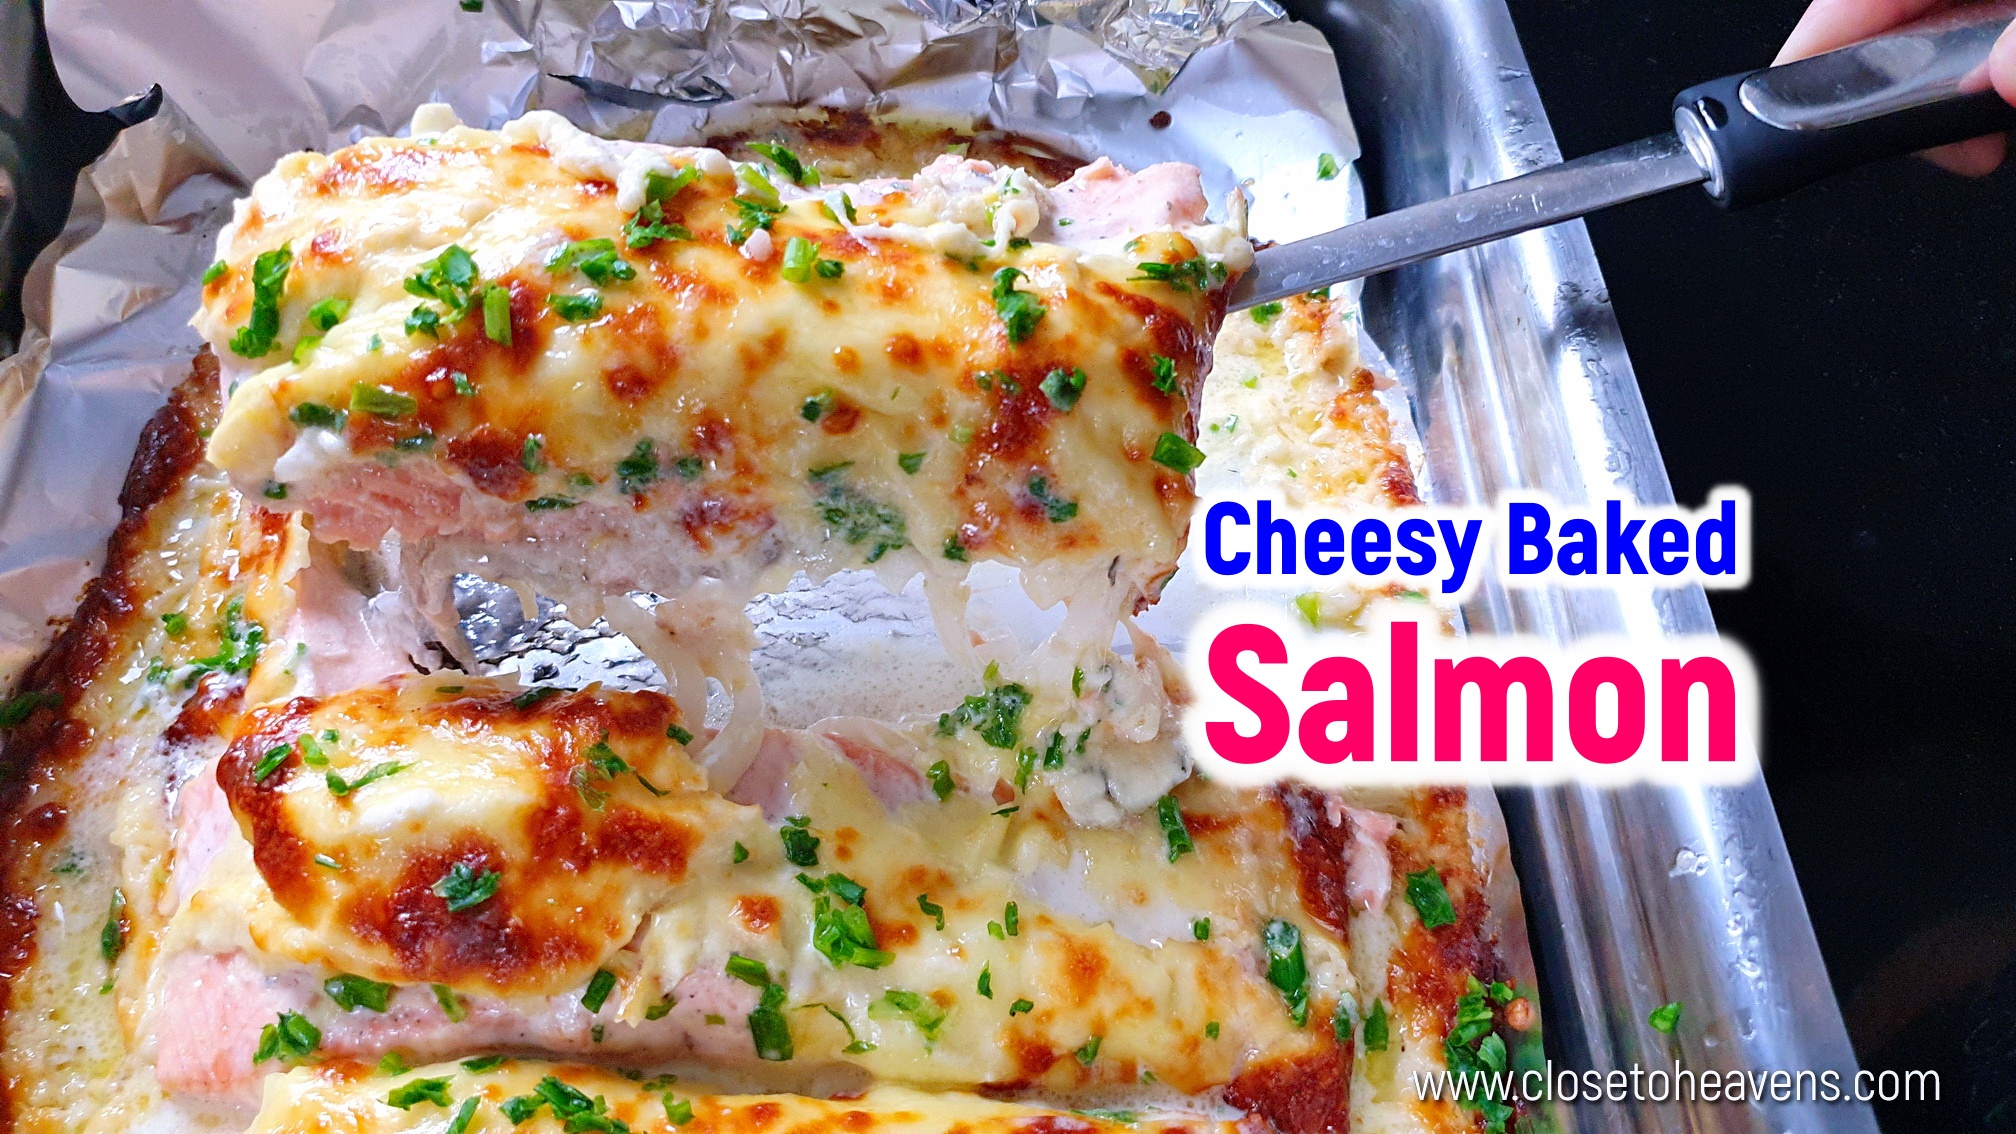 Cheesy Baked Salmon แซลมอนอบชีส